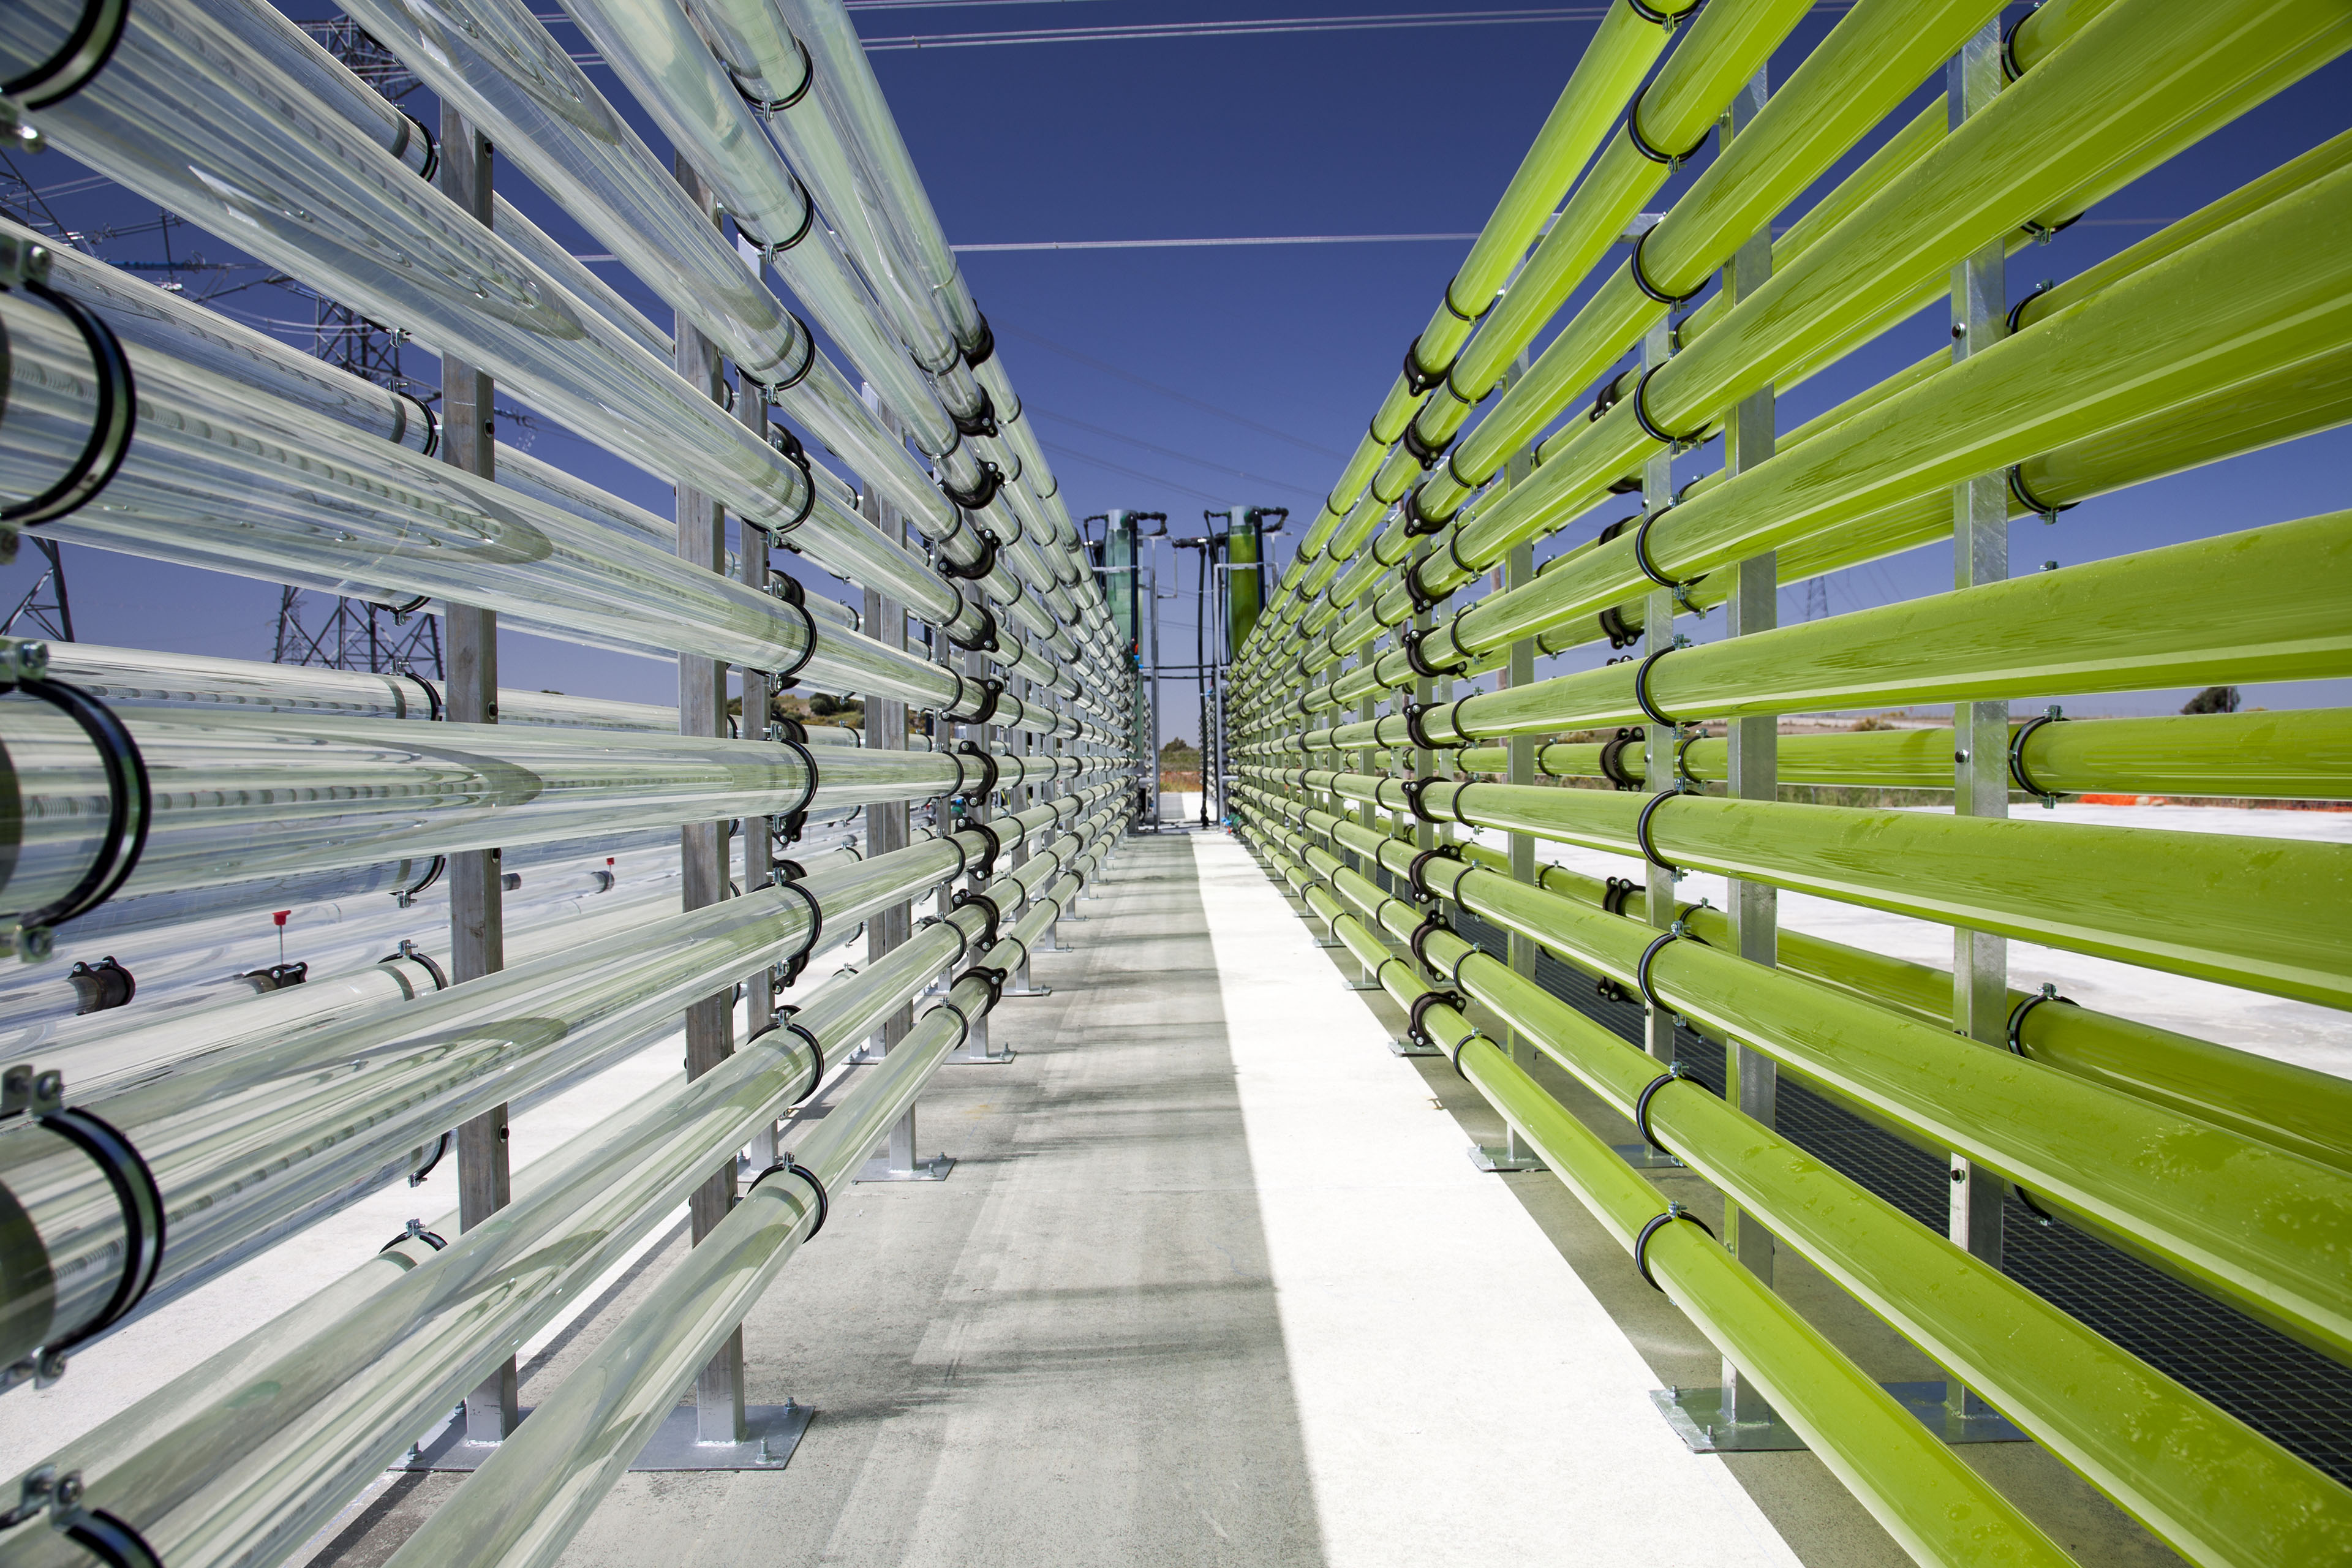 Tubular bioreactors filled with green algae fixing CO2